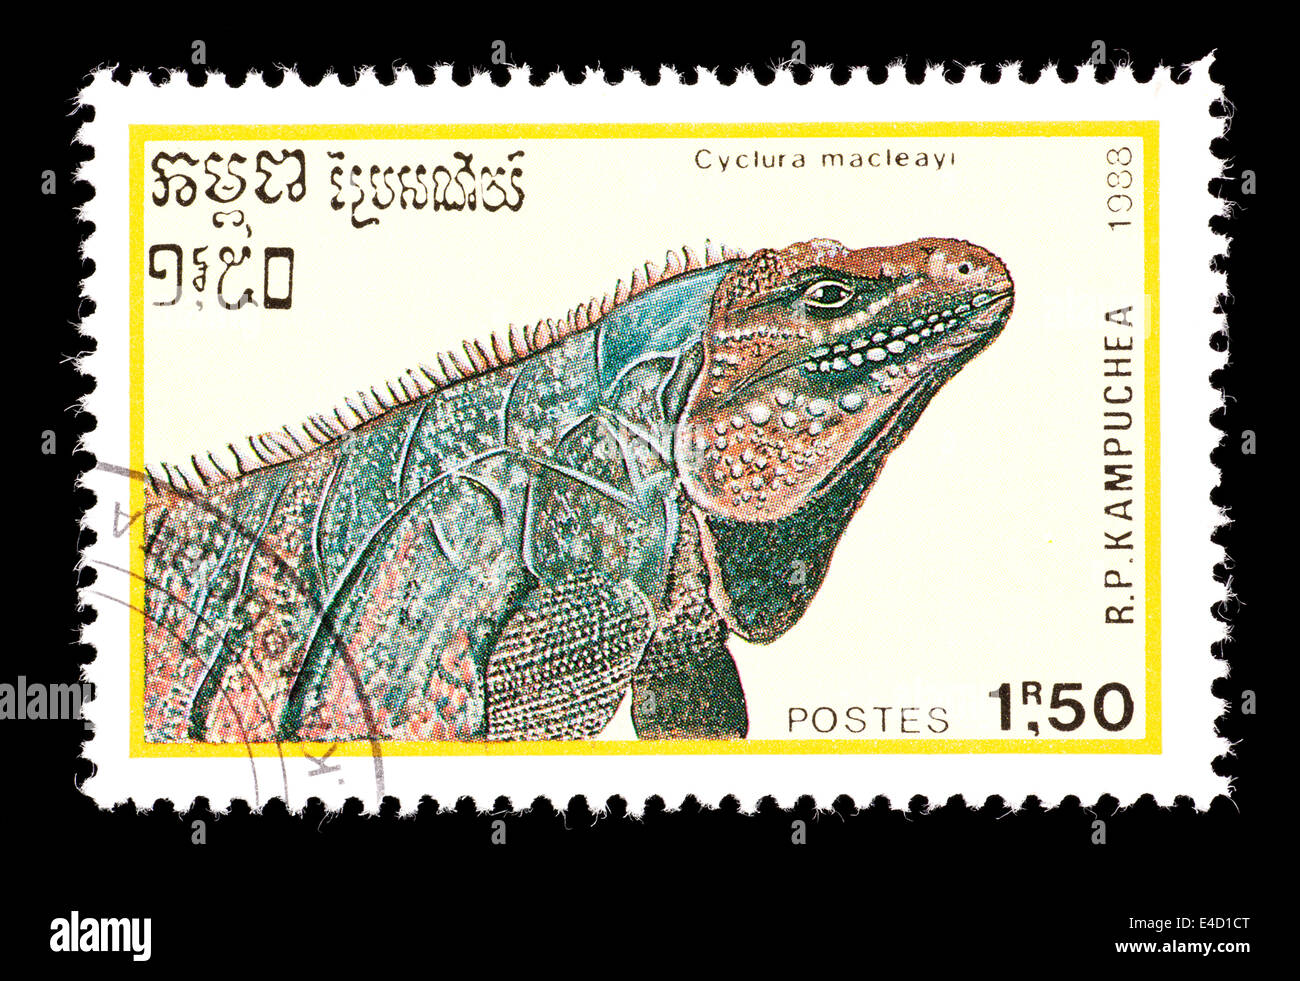 Postage stamp from Cambodia (Kampuchea) depicting Grand Cayman blue iguana (Cyclura macleayi) Stock Photo